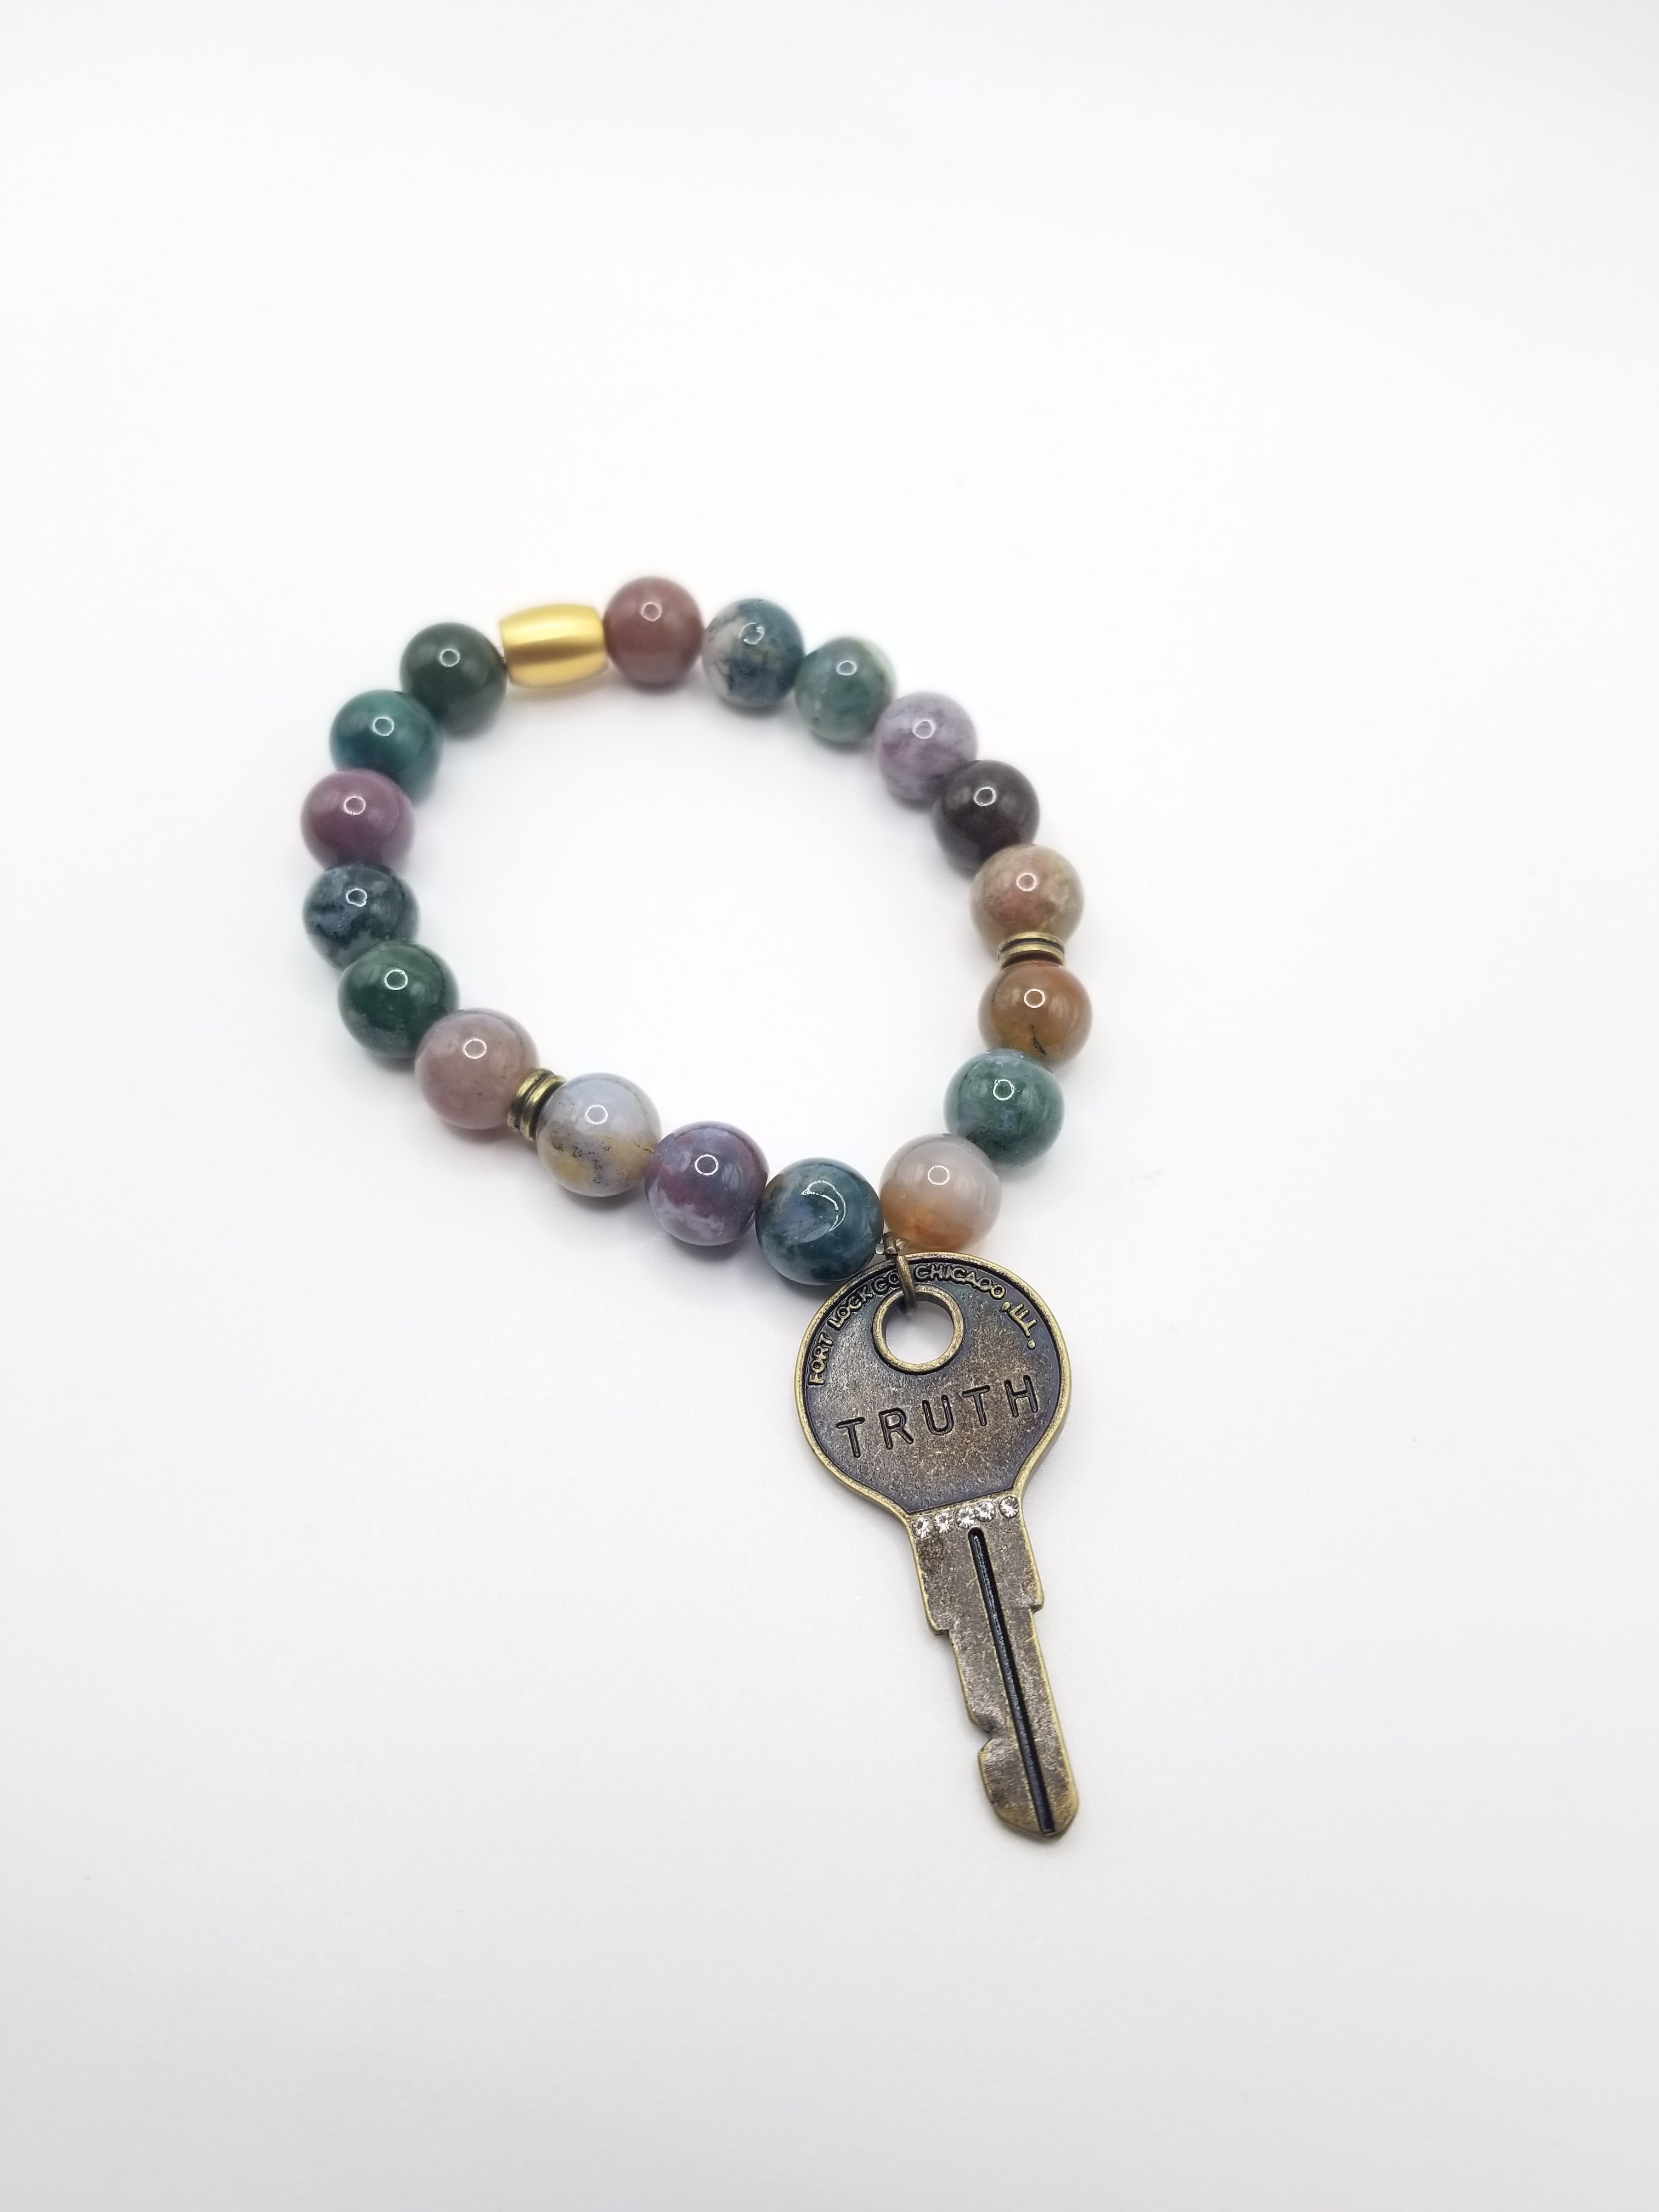 Agate Beaded Bracelet with TRUTH Key Pendant